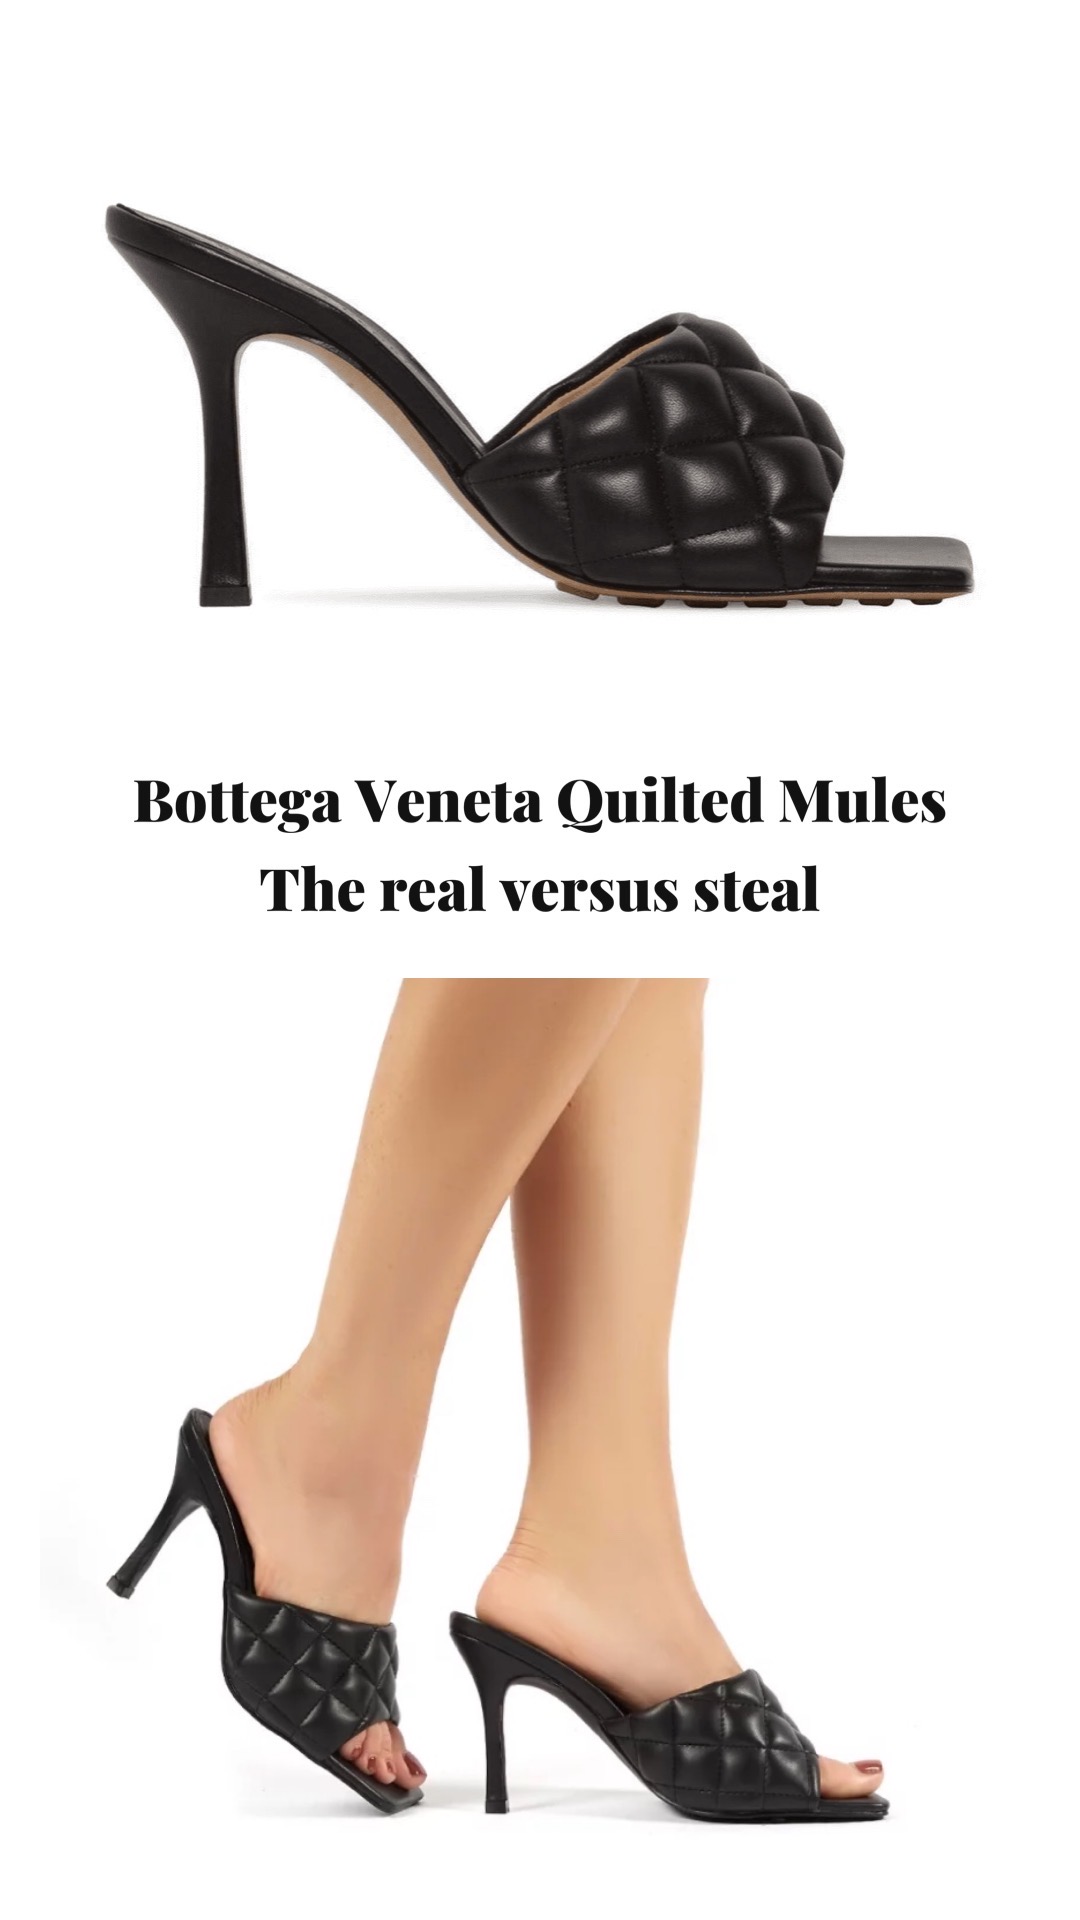 Bottega Veneta quilted mules: real versus steal. Selection of Bottega Veneta high heeled mules and Bottega Veneta dupes